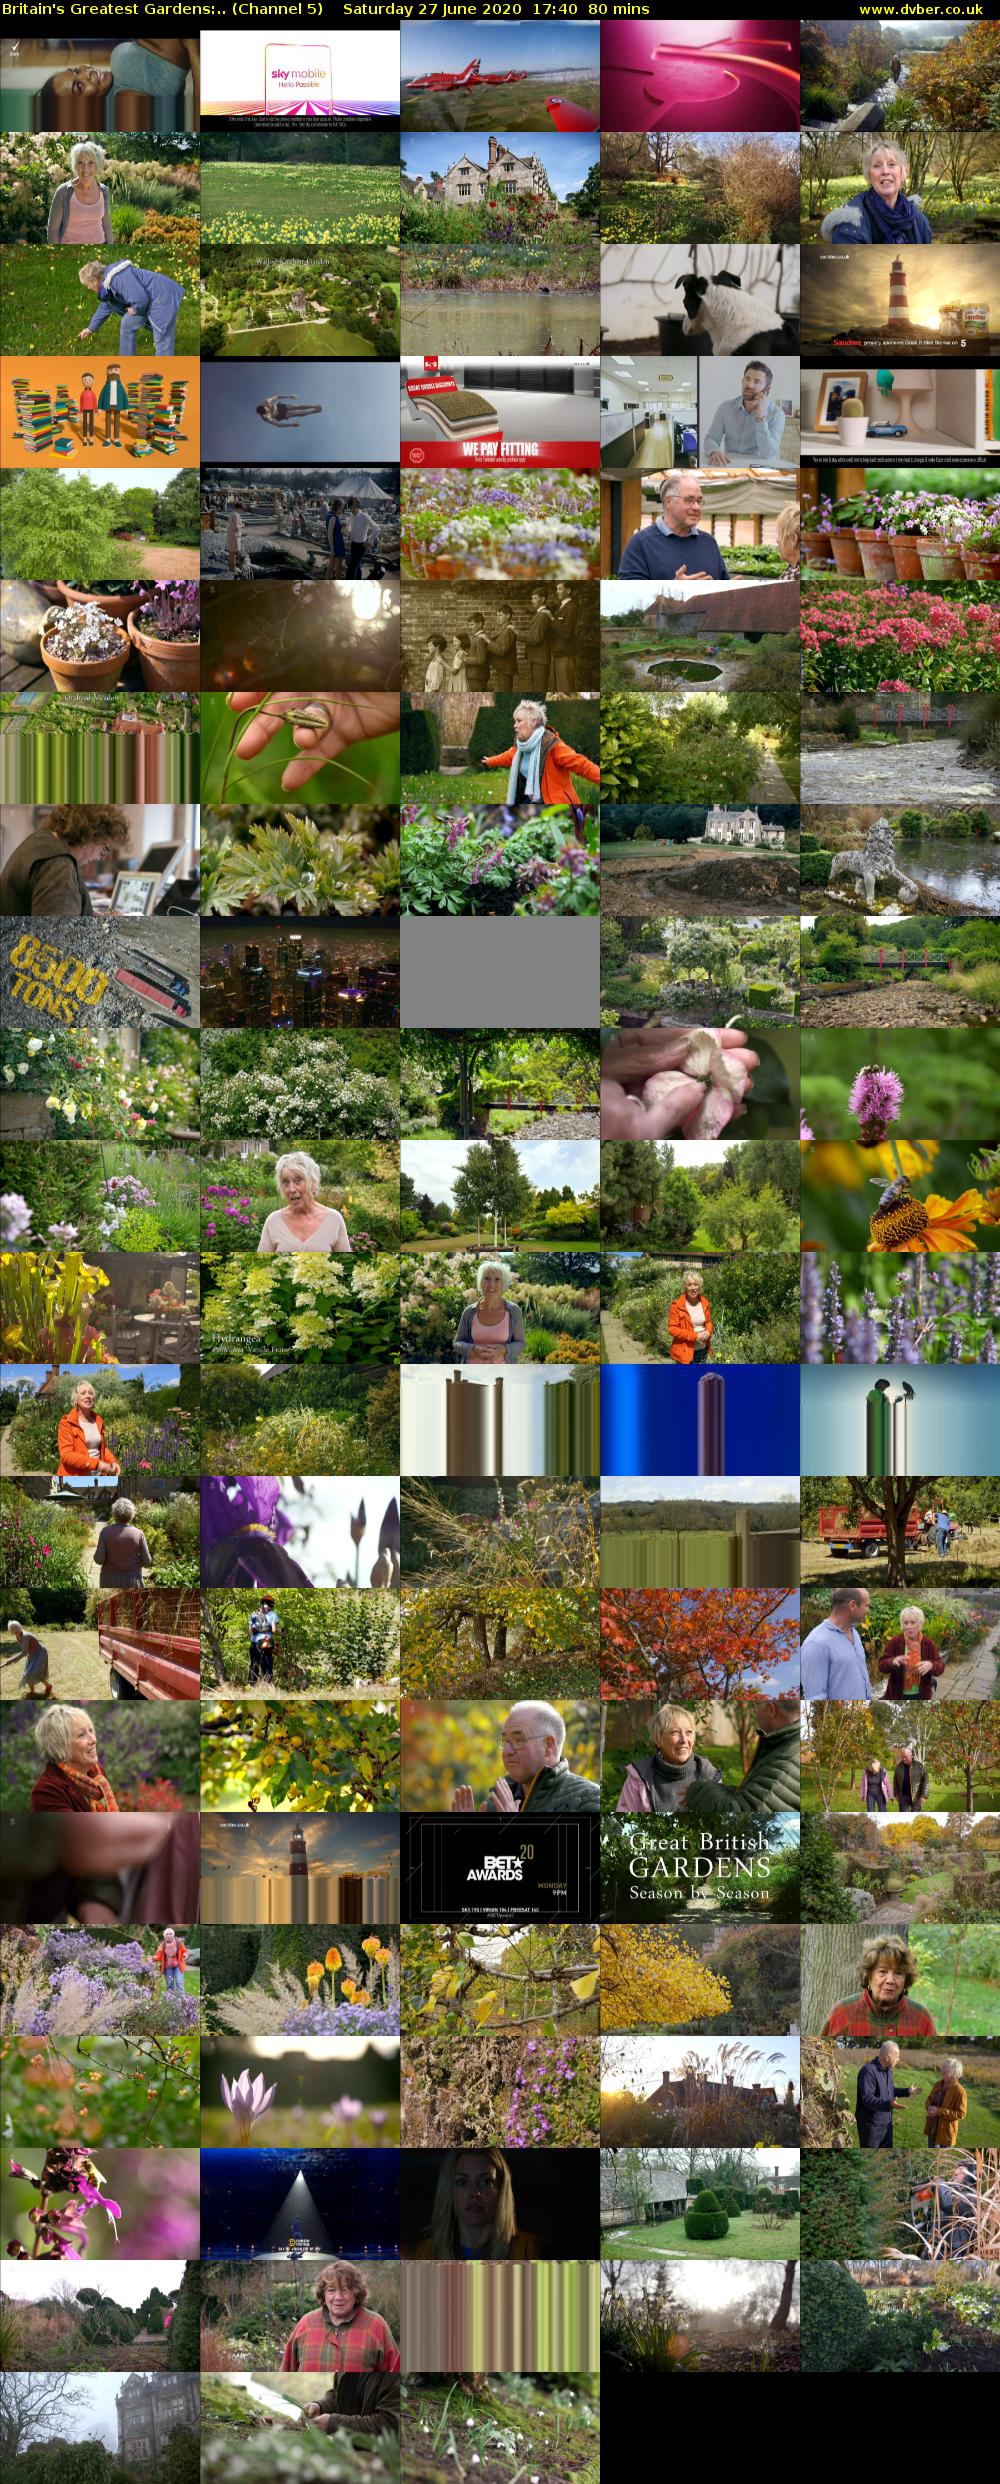 Britain's Greatest Gardens:.. (Channel 5) Saturday 27 June 2020 17:40 - 19:00